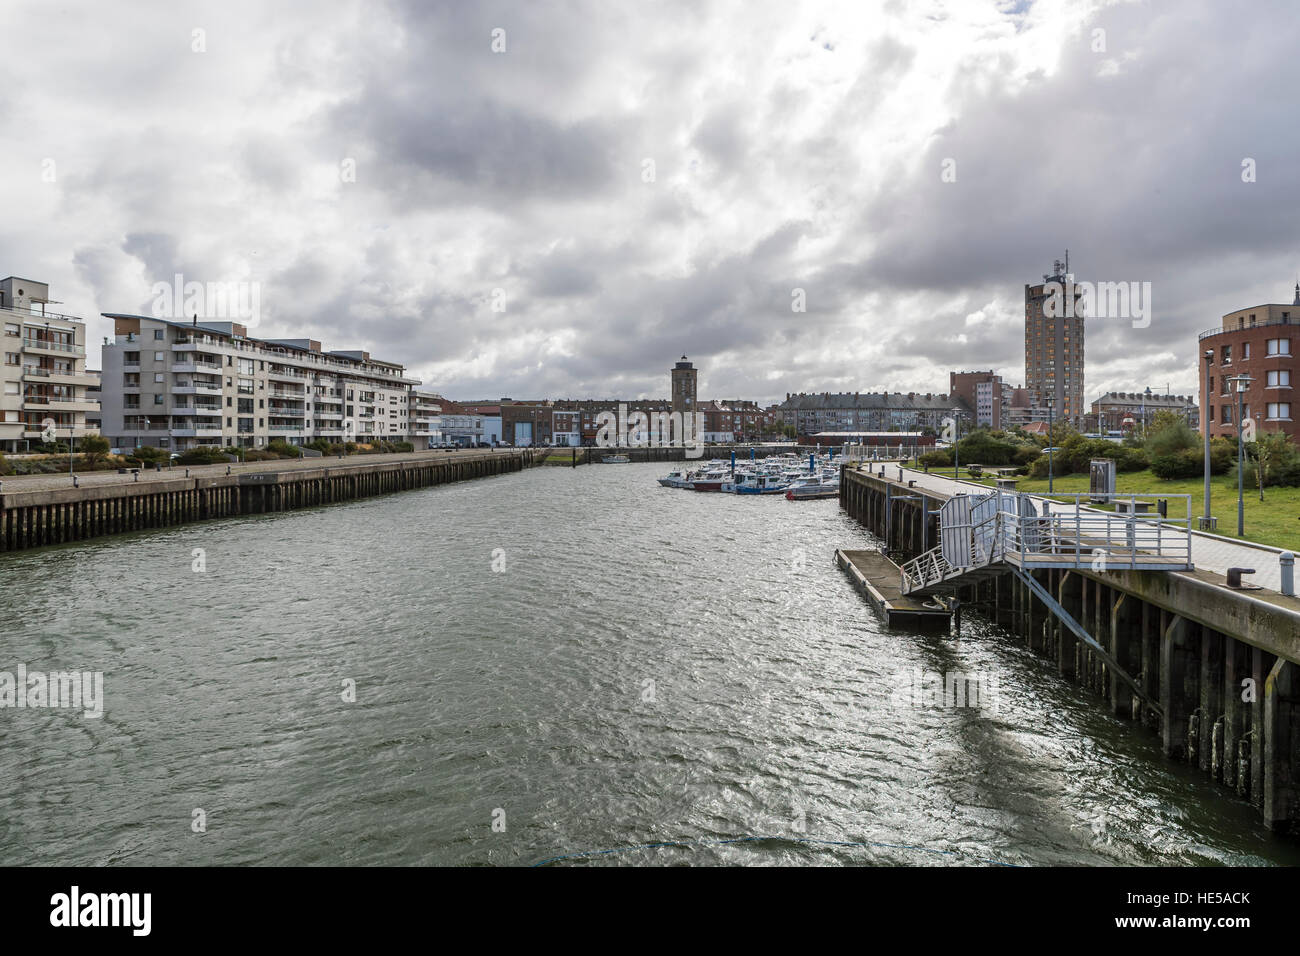 Marina development from the Pont de la Bataille du Texel Dunkirk, France. Stock Photo